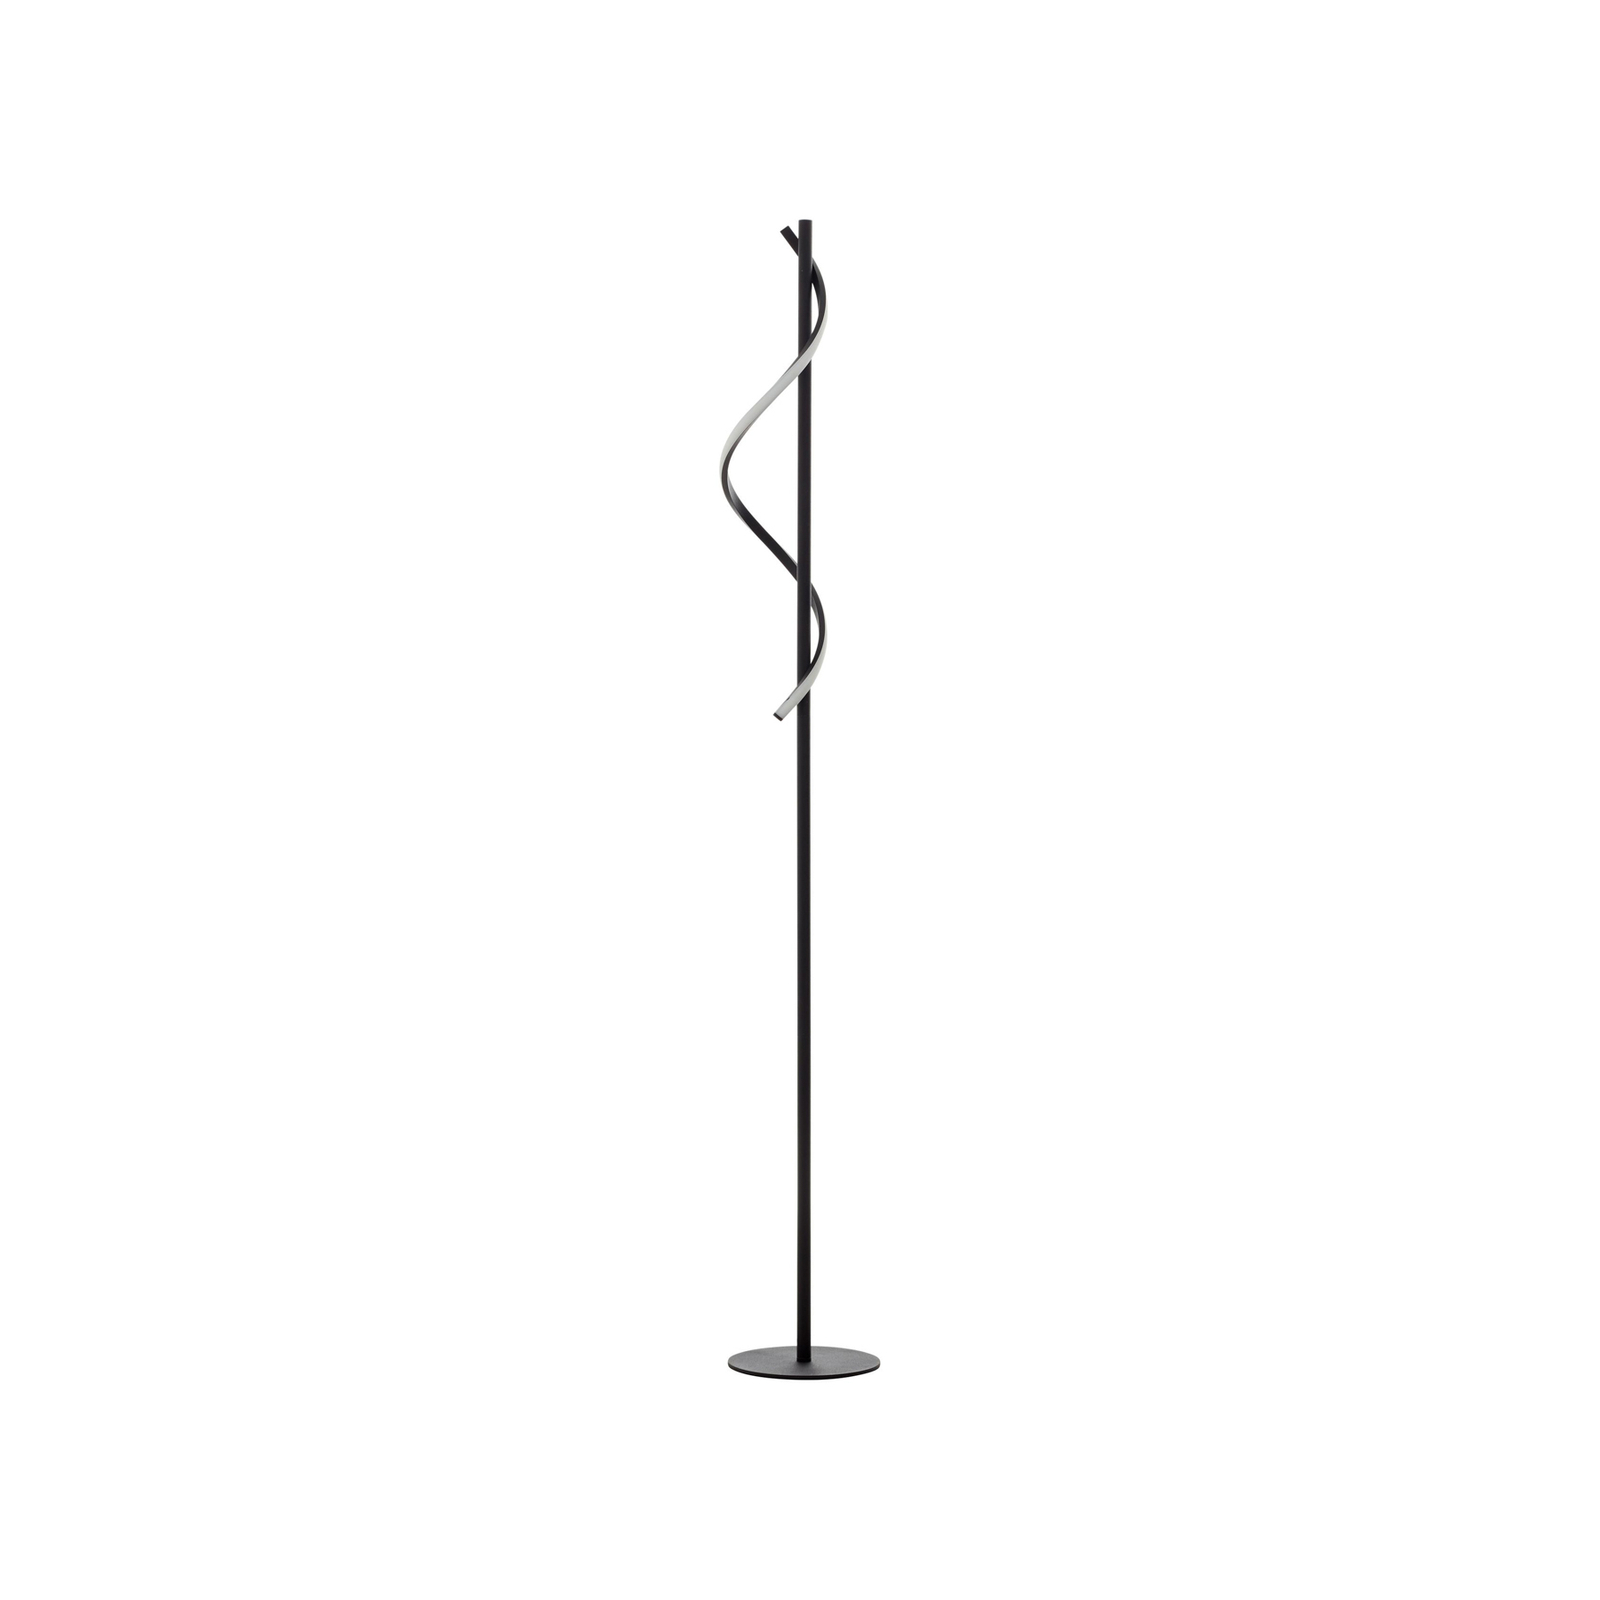 LED-Stehlampe Eunice, Höhe 150 cm, schwarz, Metall